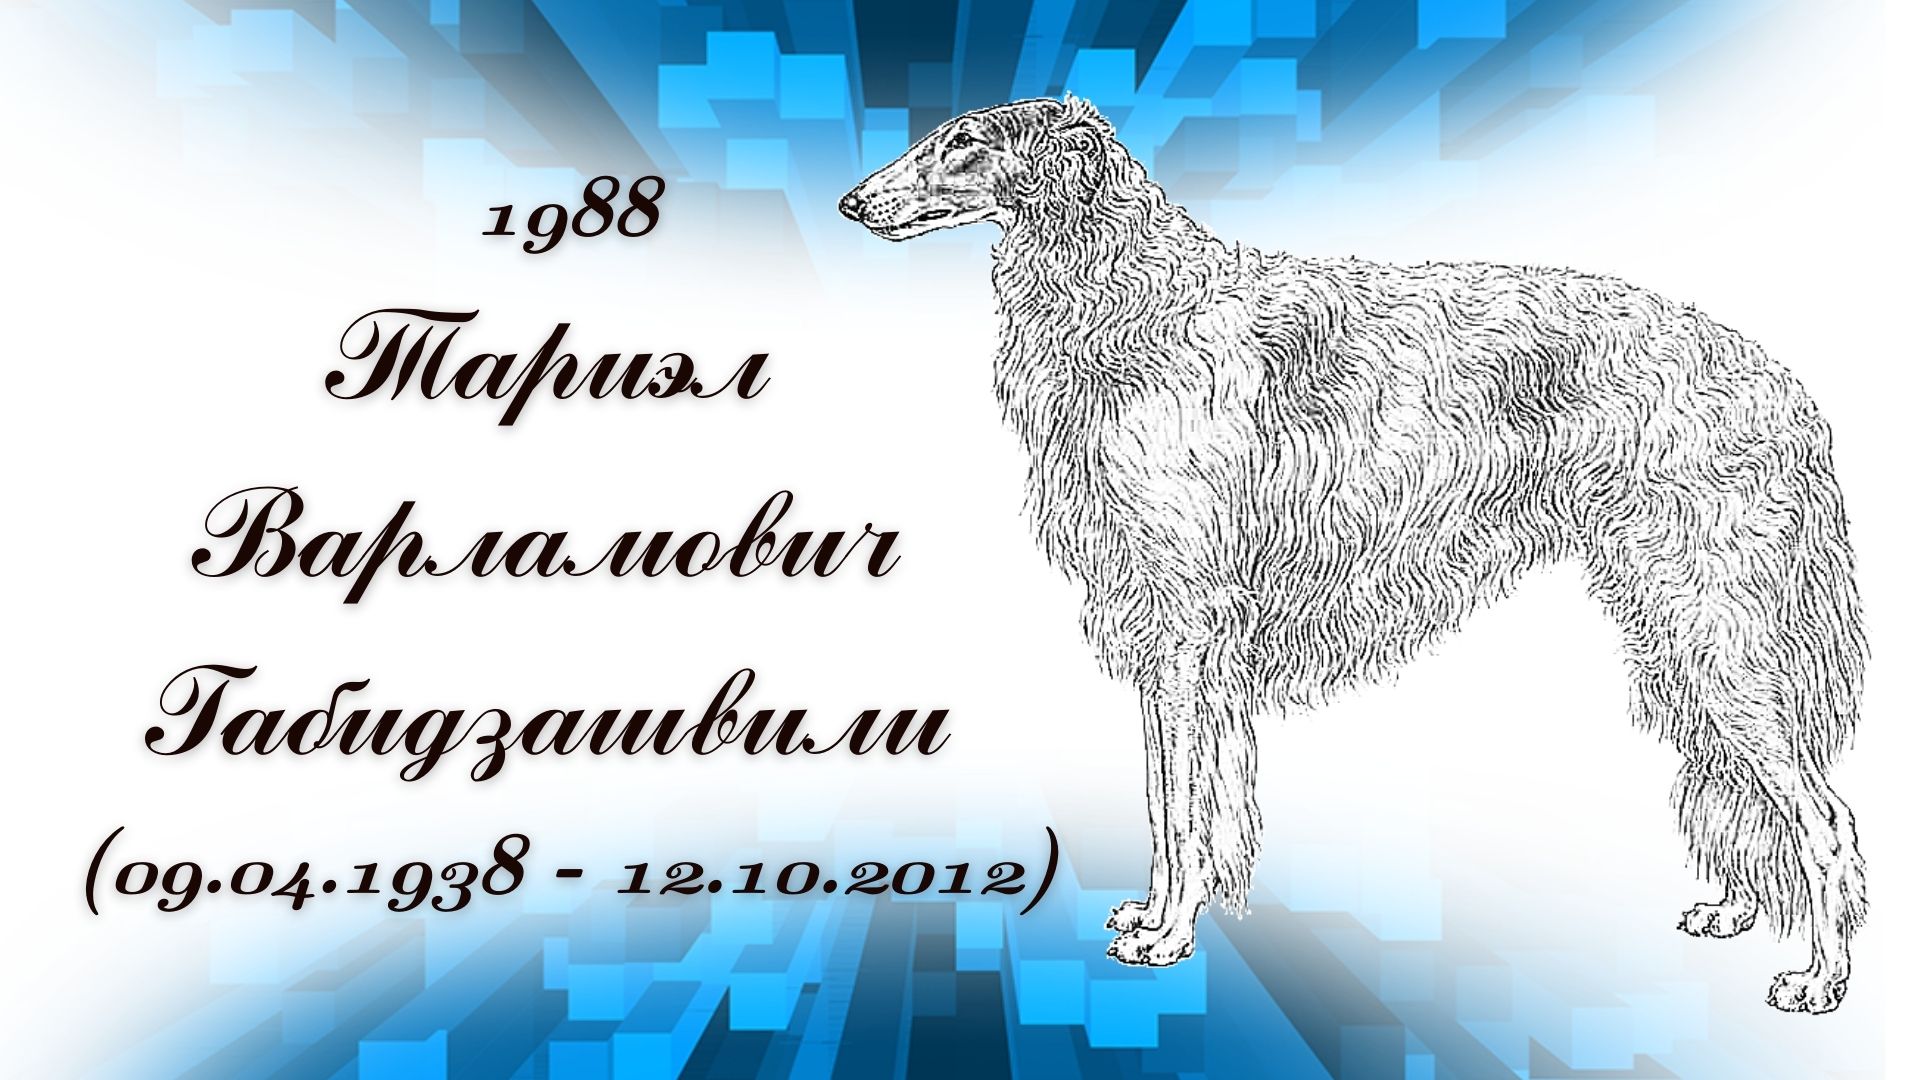 1988,ТАРИЭЛ ВАРЛАМОВИЧ ГАБИДЗАШВИЛИ (09.04.1938 - 12.10.2012)